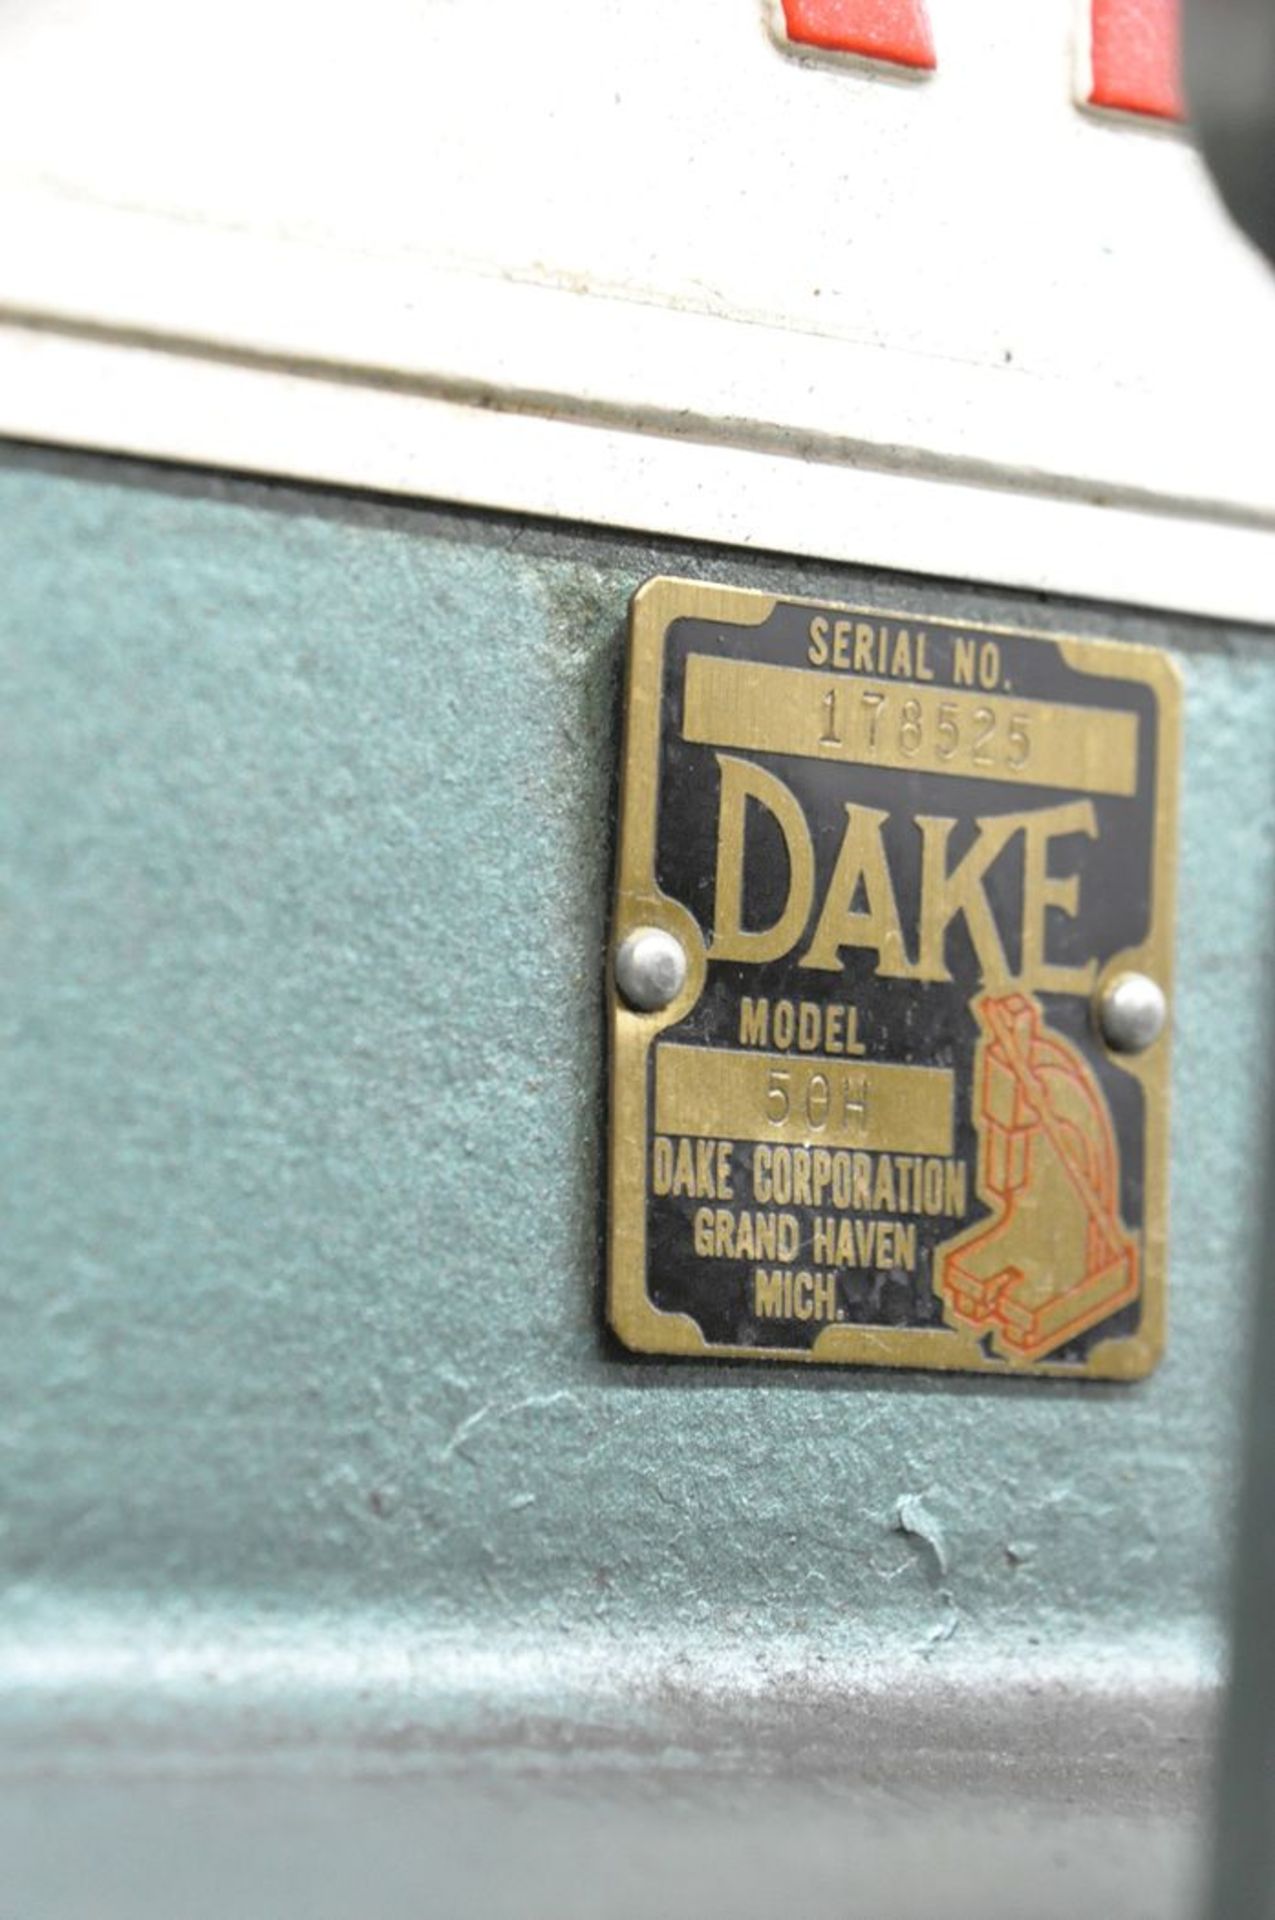 Dake Model 50H 50-Ton Adjustable Hydraulic H-Frame Shop Press, S/N 178525 - Image 5 of 5